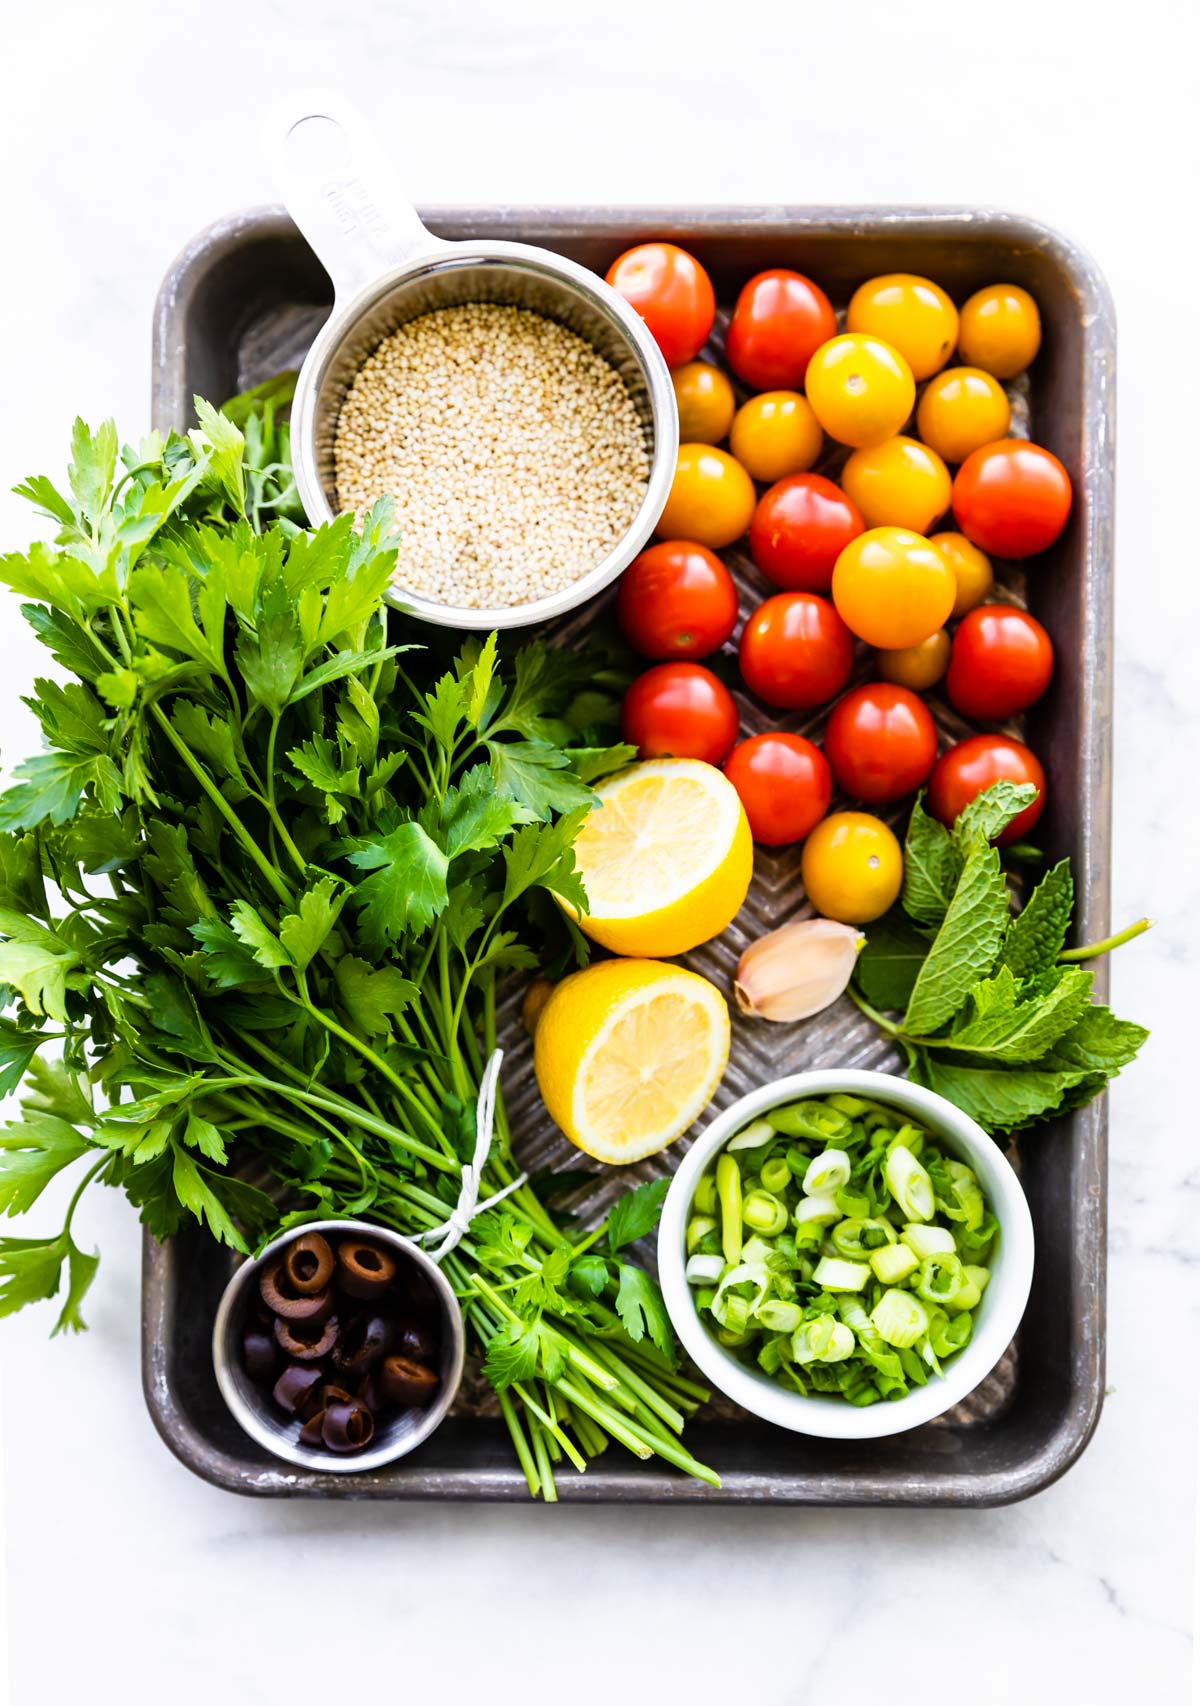 tabouli salad recipe ingredients beautifully arranged on a cutting board